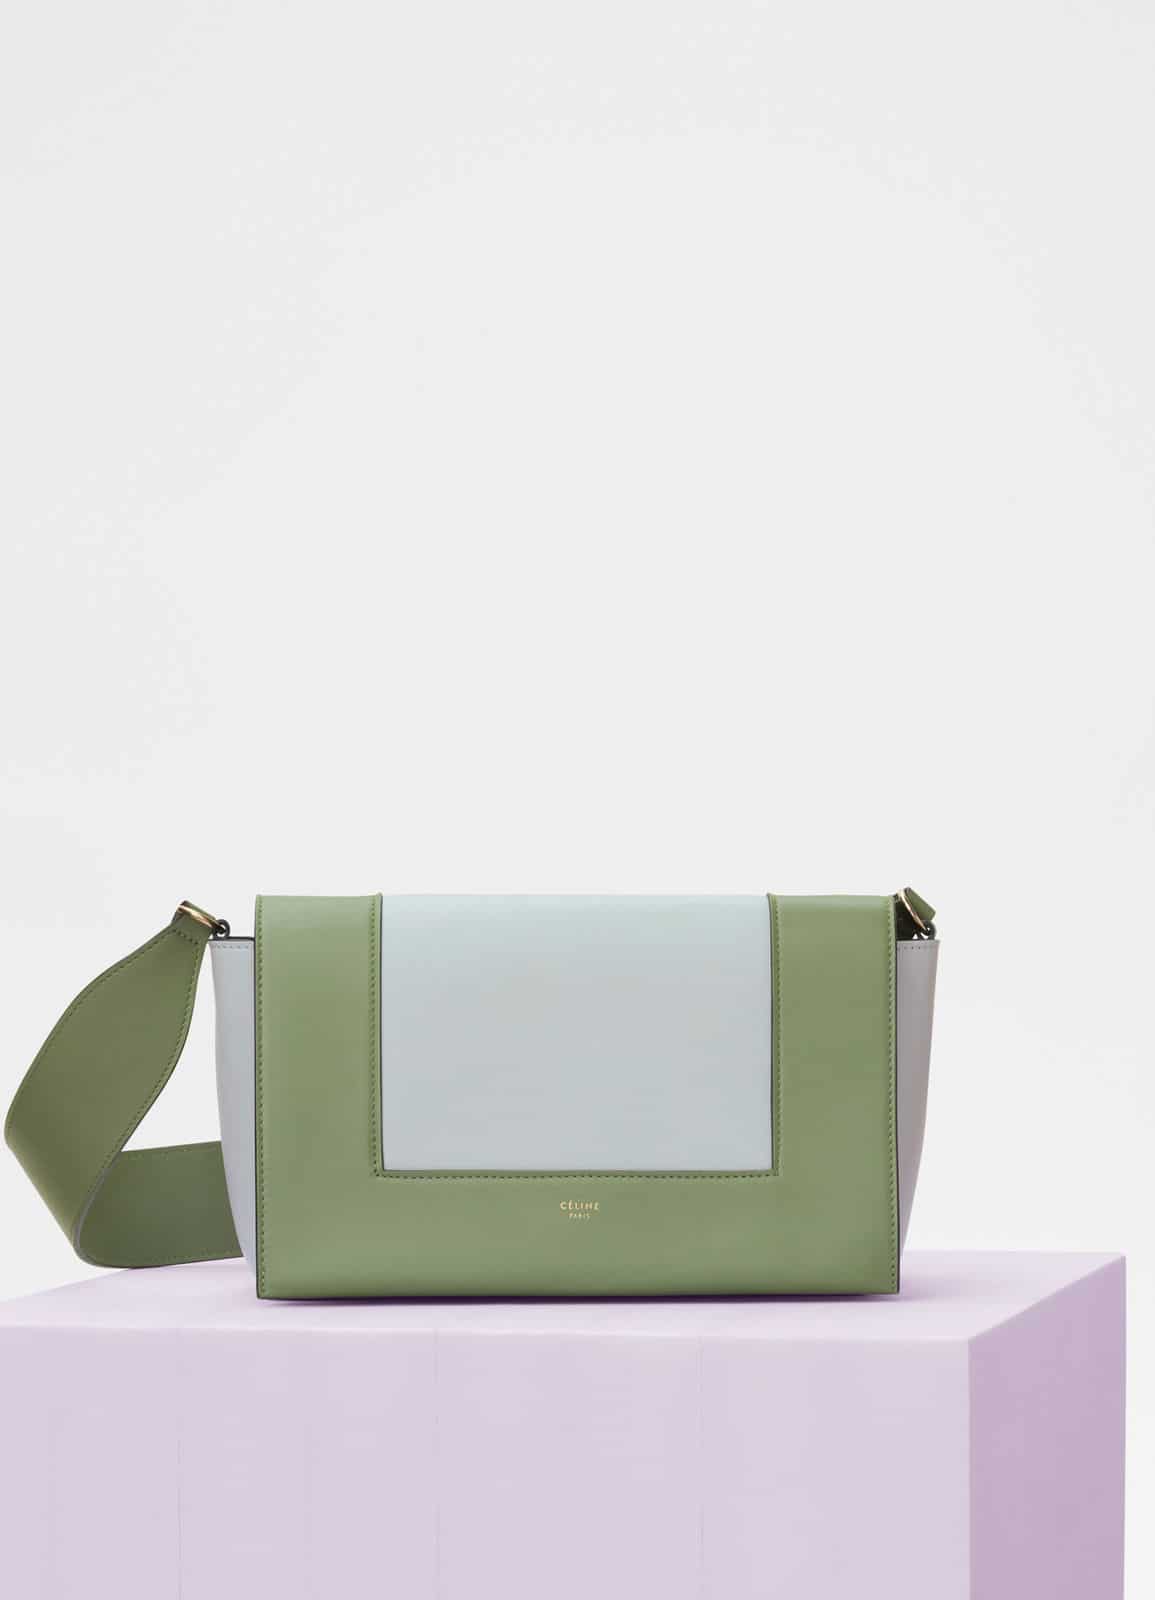 Celine Luggage Micro Tote Olive Green